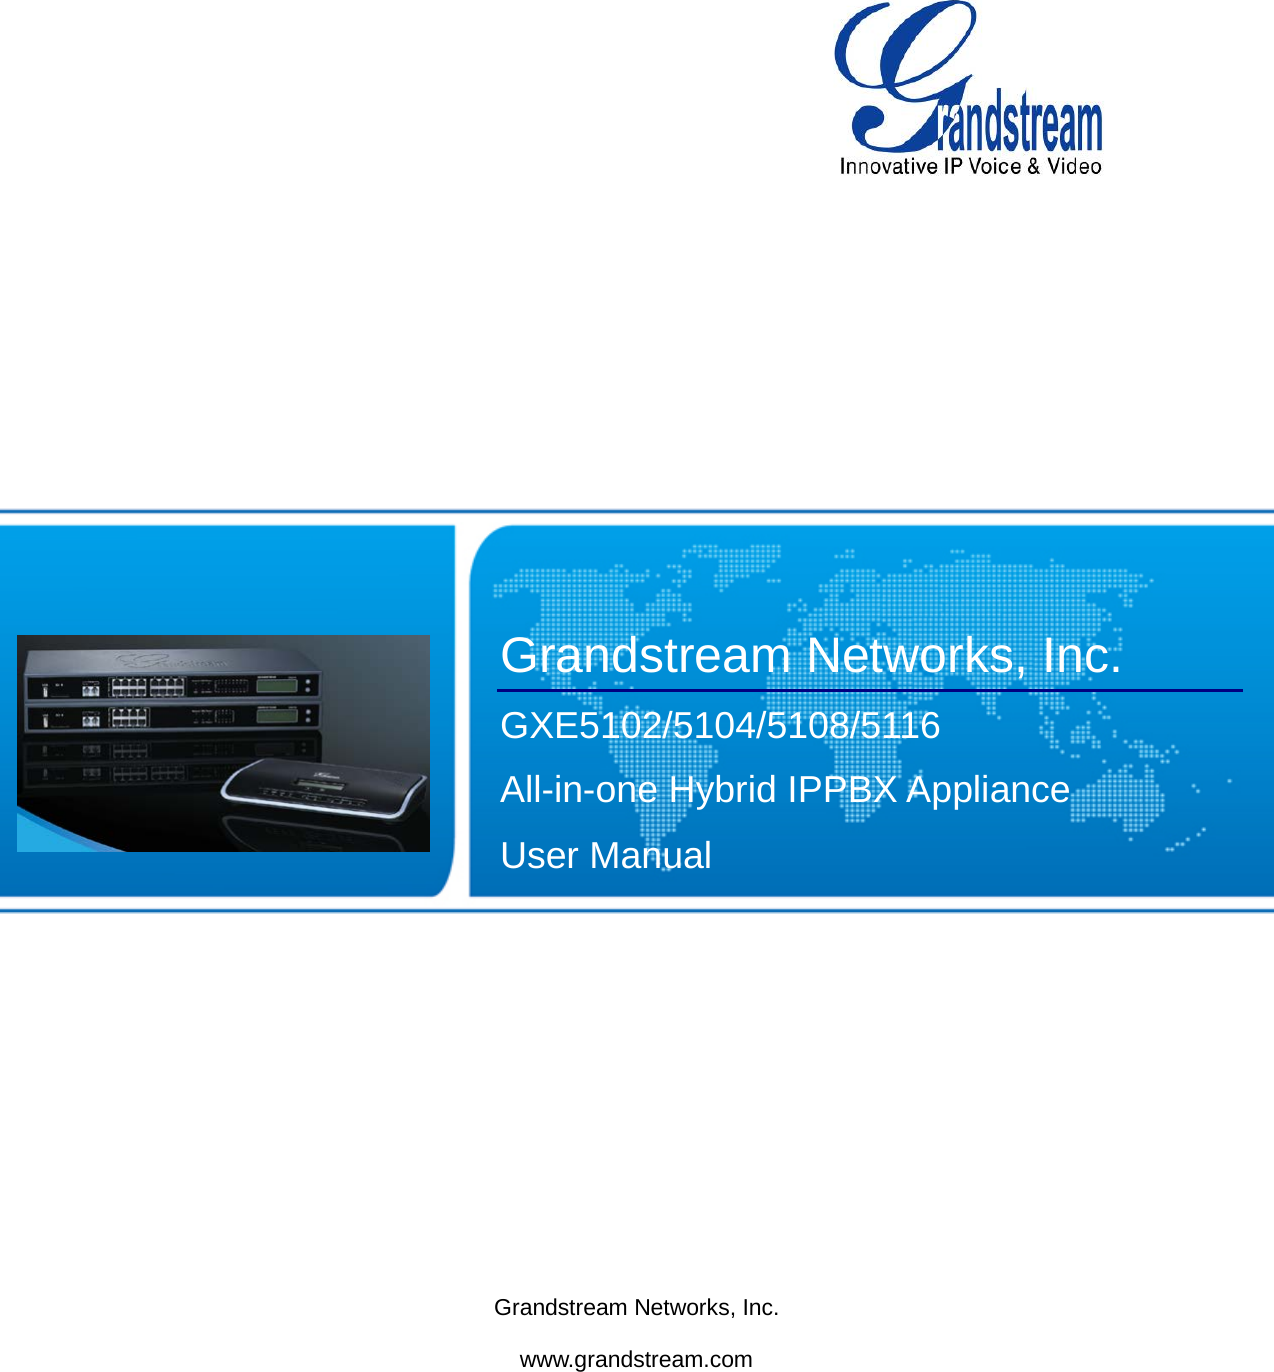  Grandstream Networks, Inc. www.grandstream.com                Grandstream Networks, Inc. GXE5102/5104/5108/5116 All-in-one Hybrid IPPBX Appliance User Manual  